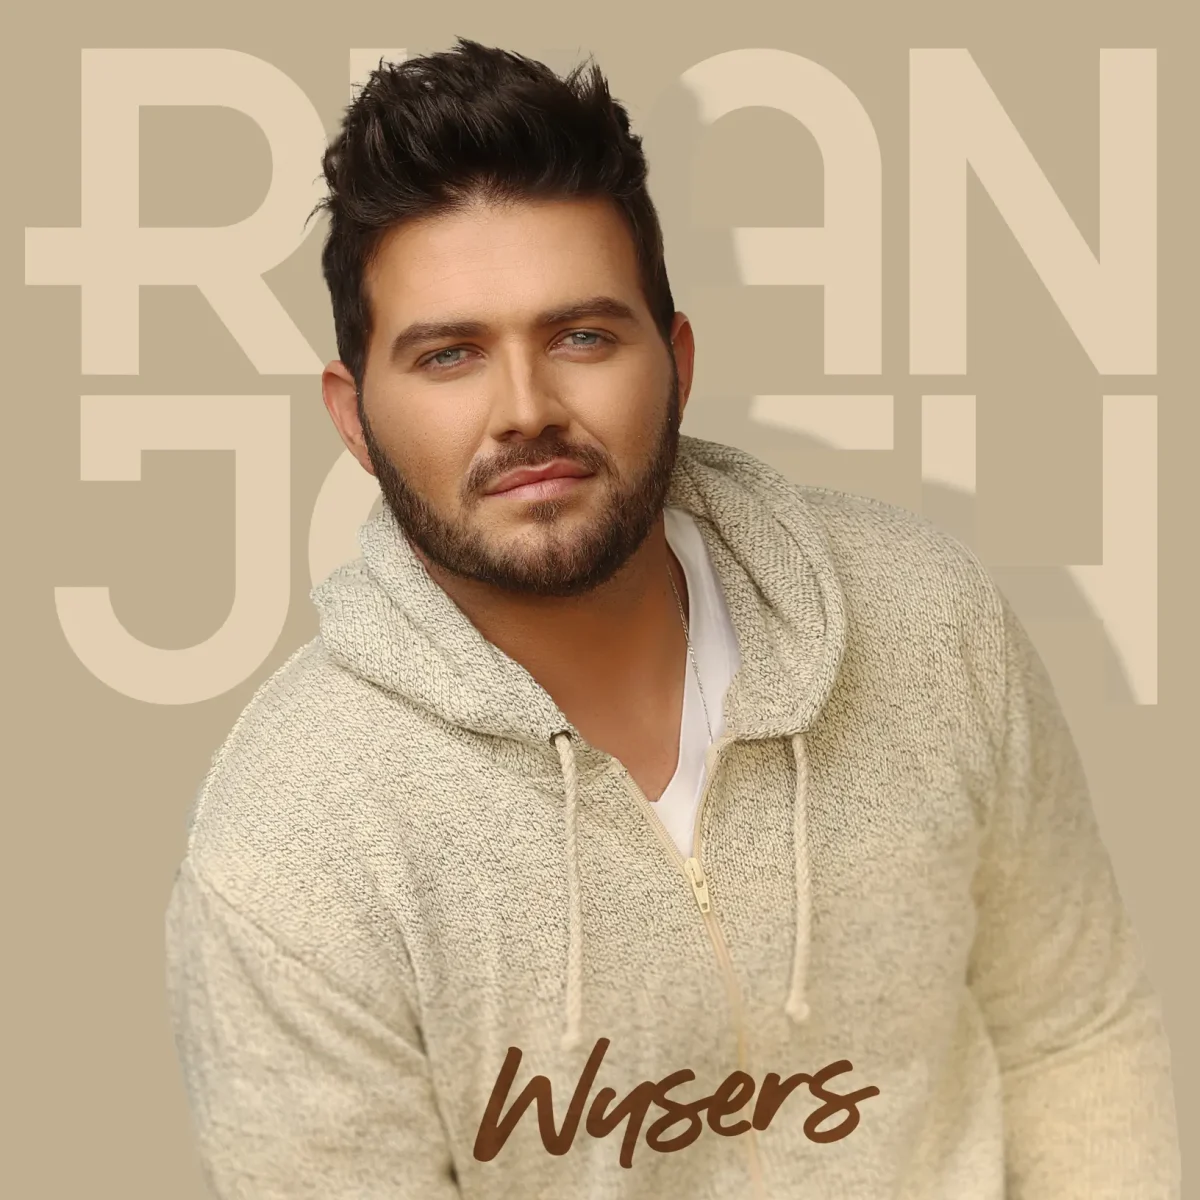 Ruan Josh - Wysers Album 1